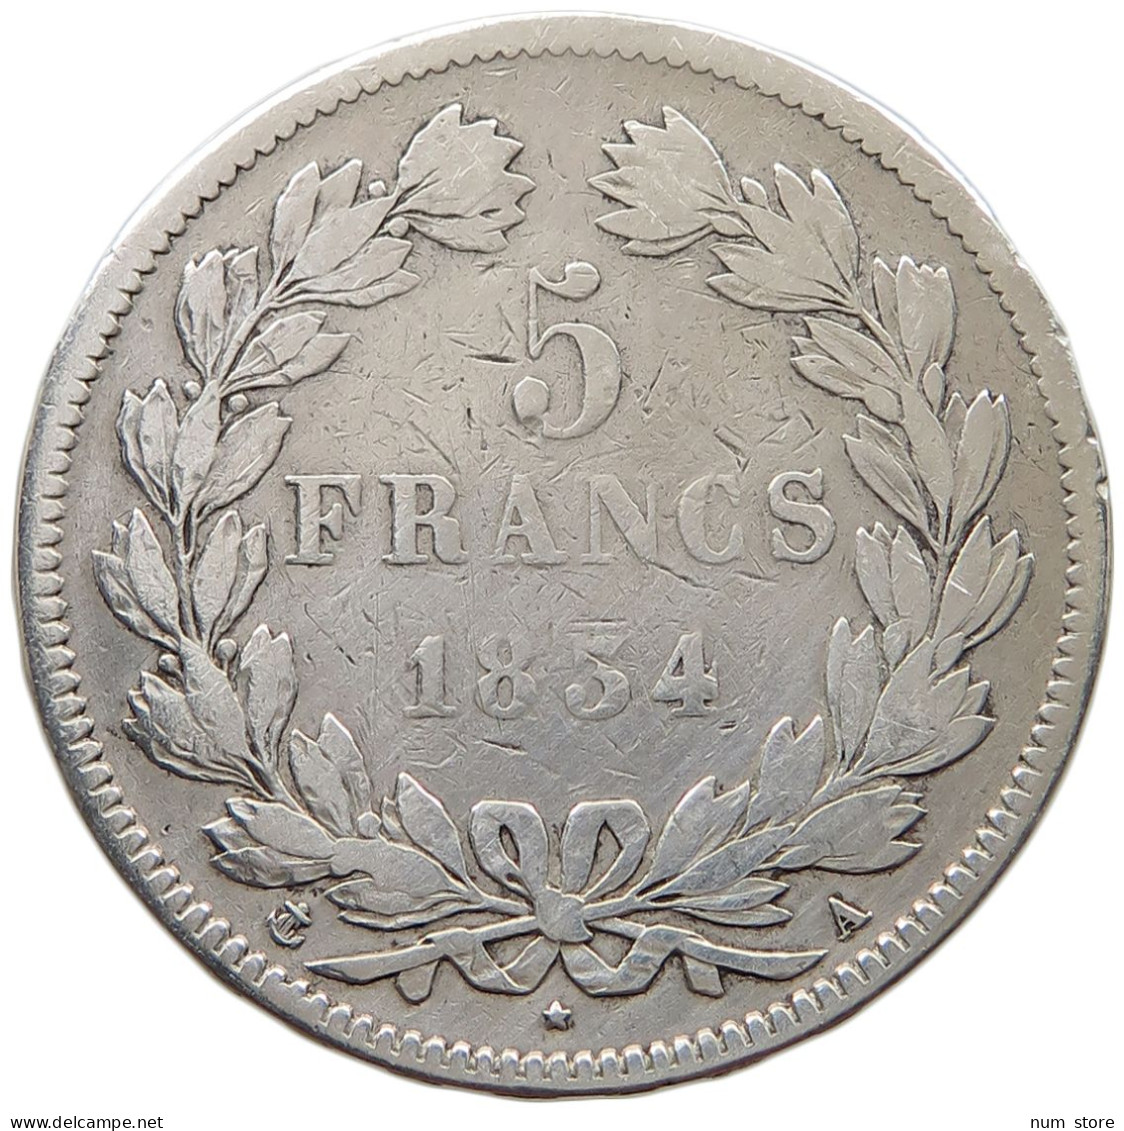 FRANCE 5 FRANCS 1834 A LOUIS PHILIPPE I. (1830-1848) #a001 0137 - 5 Francs